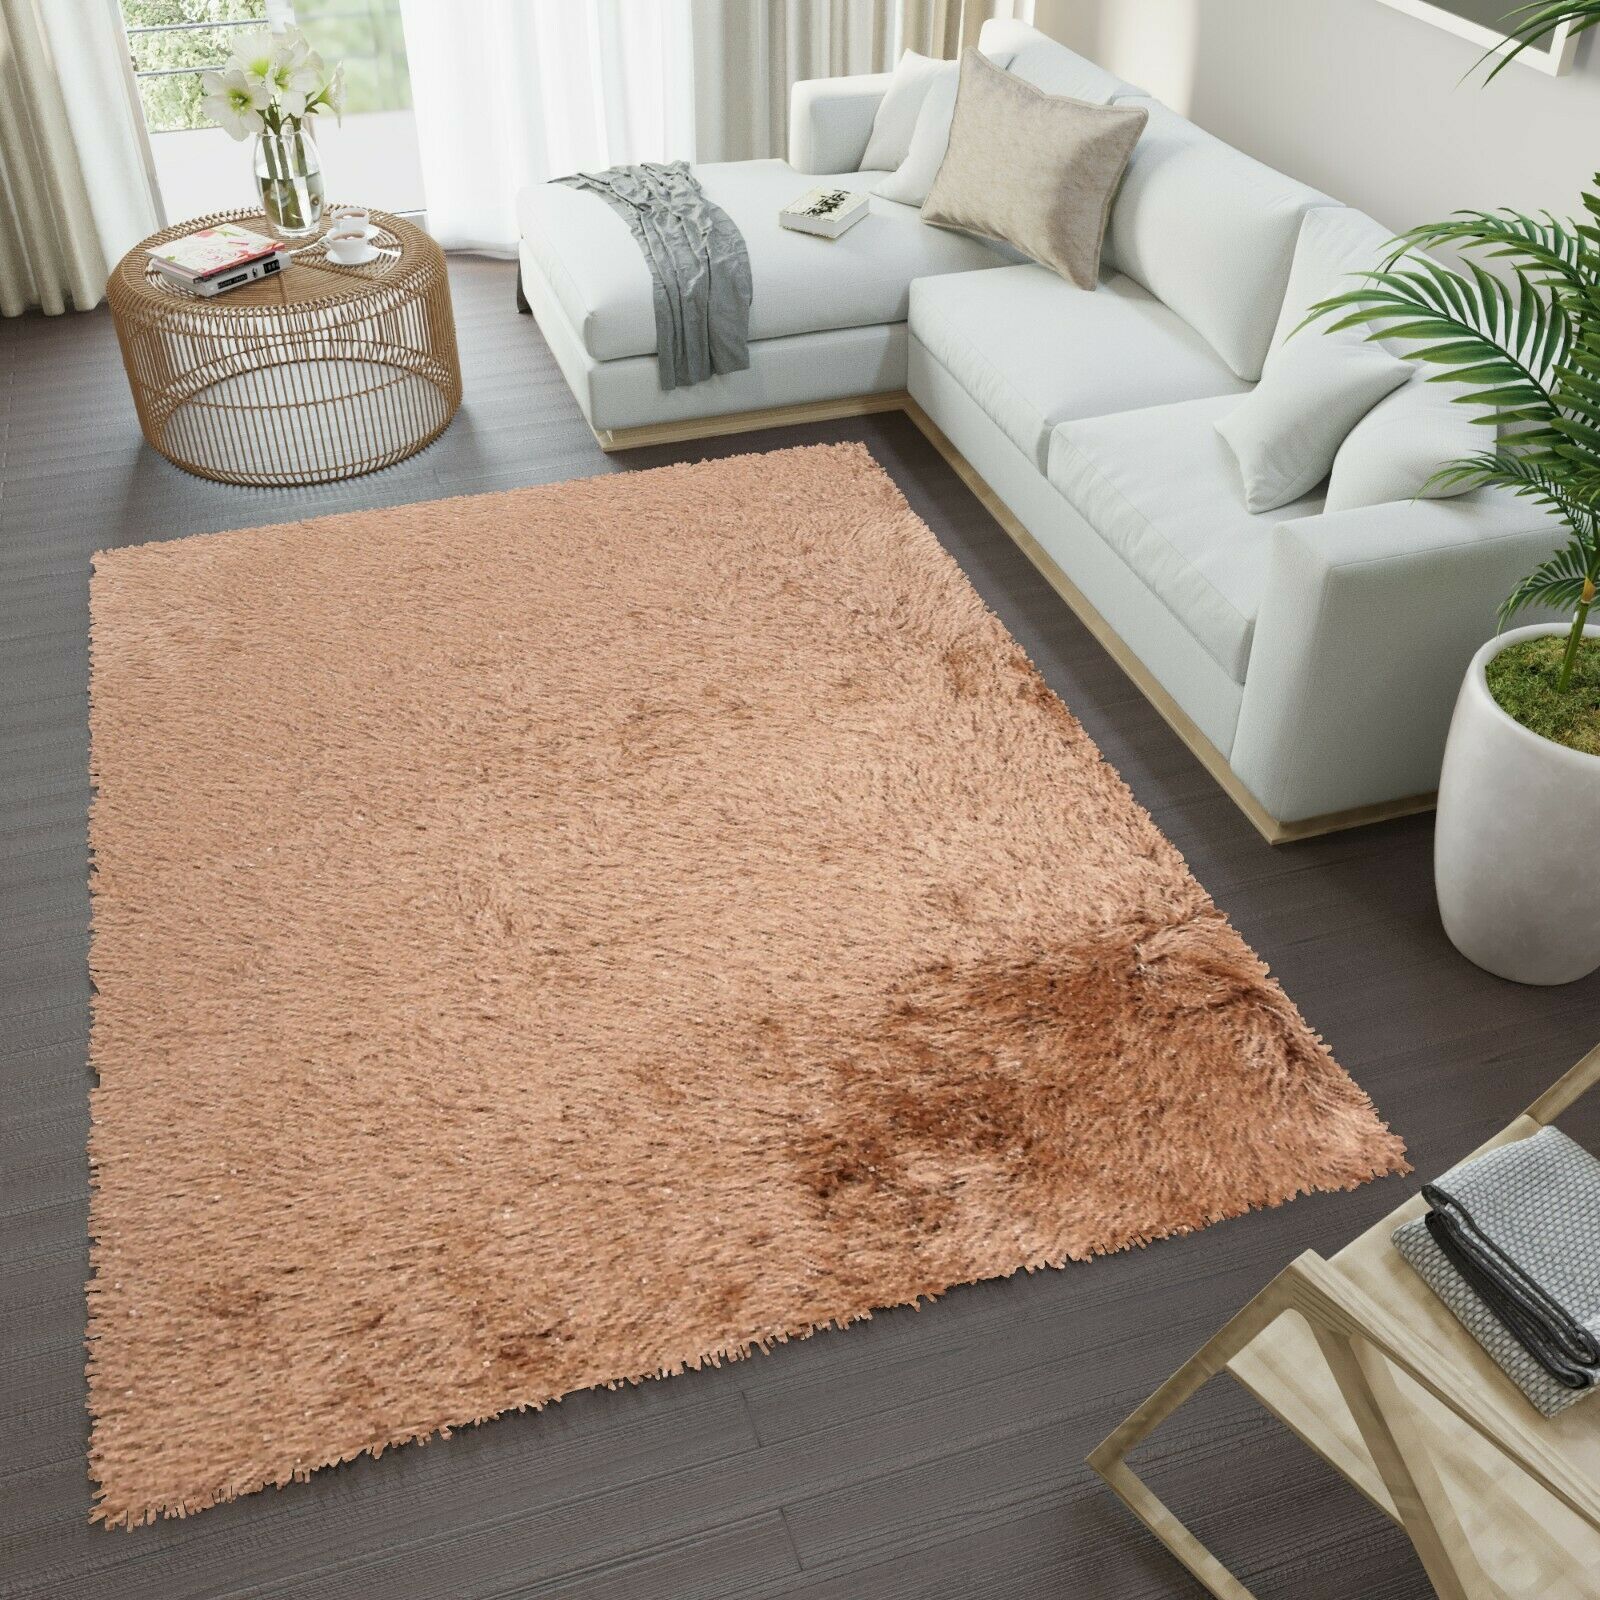 New Brown Soft Shaggy Shag Area Rug Living Room Bedroom Carpet Large Plush Rugs EBay